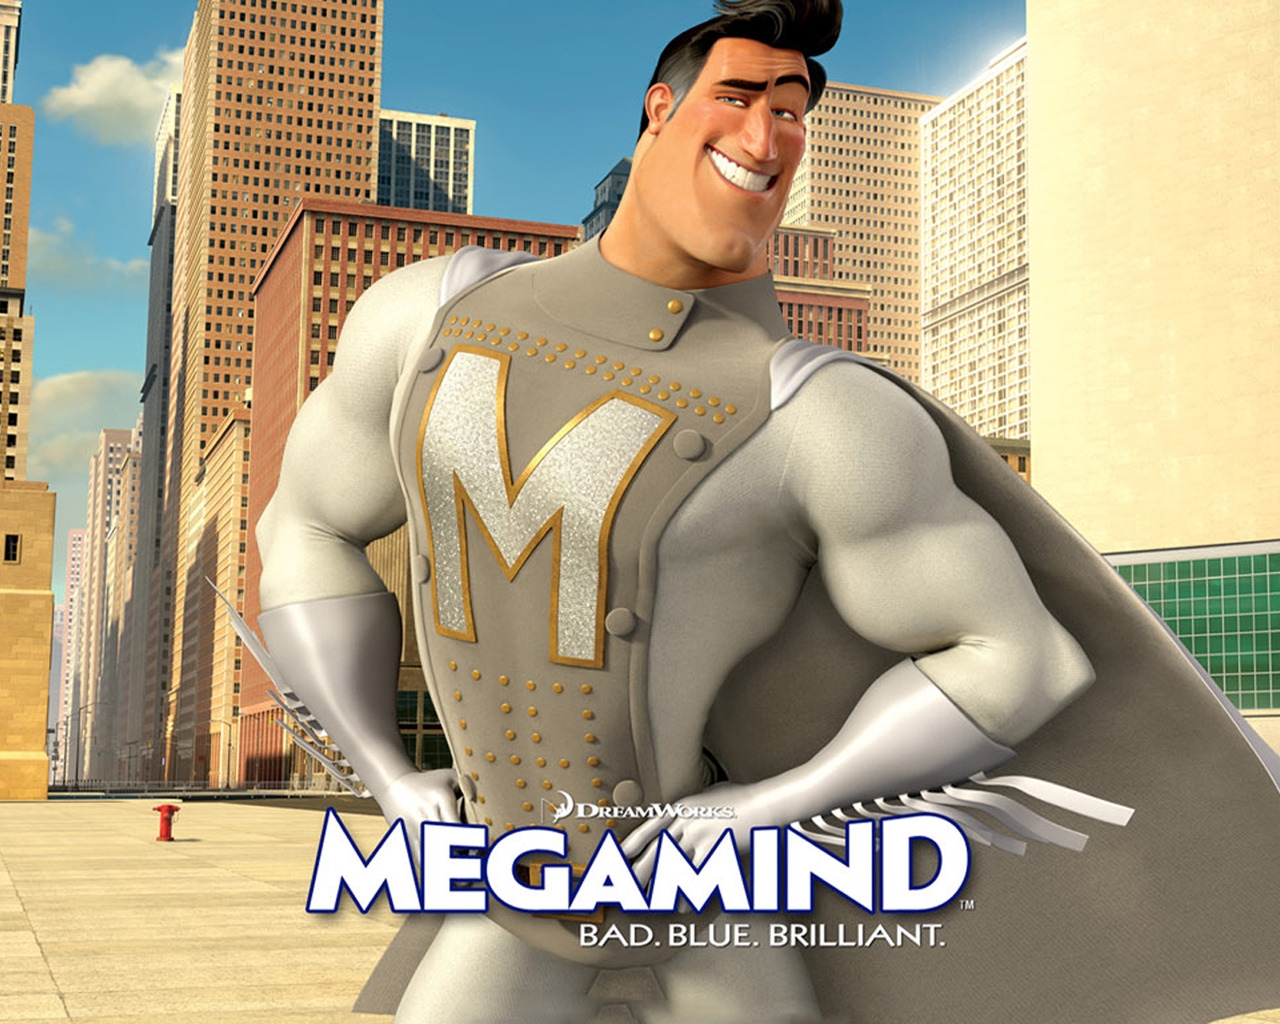 Megamind Metro Man for 1280 x 1024 resolution